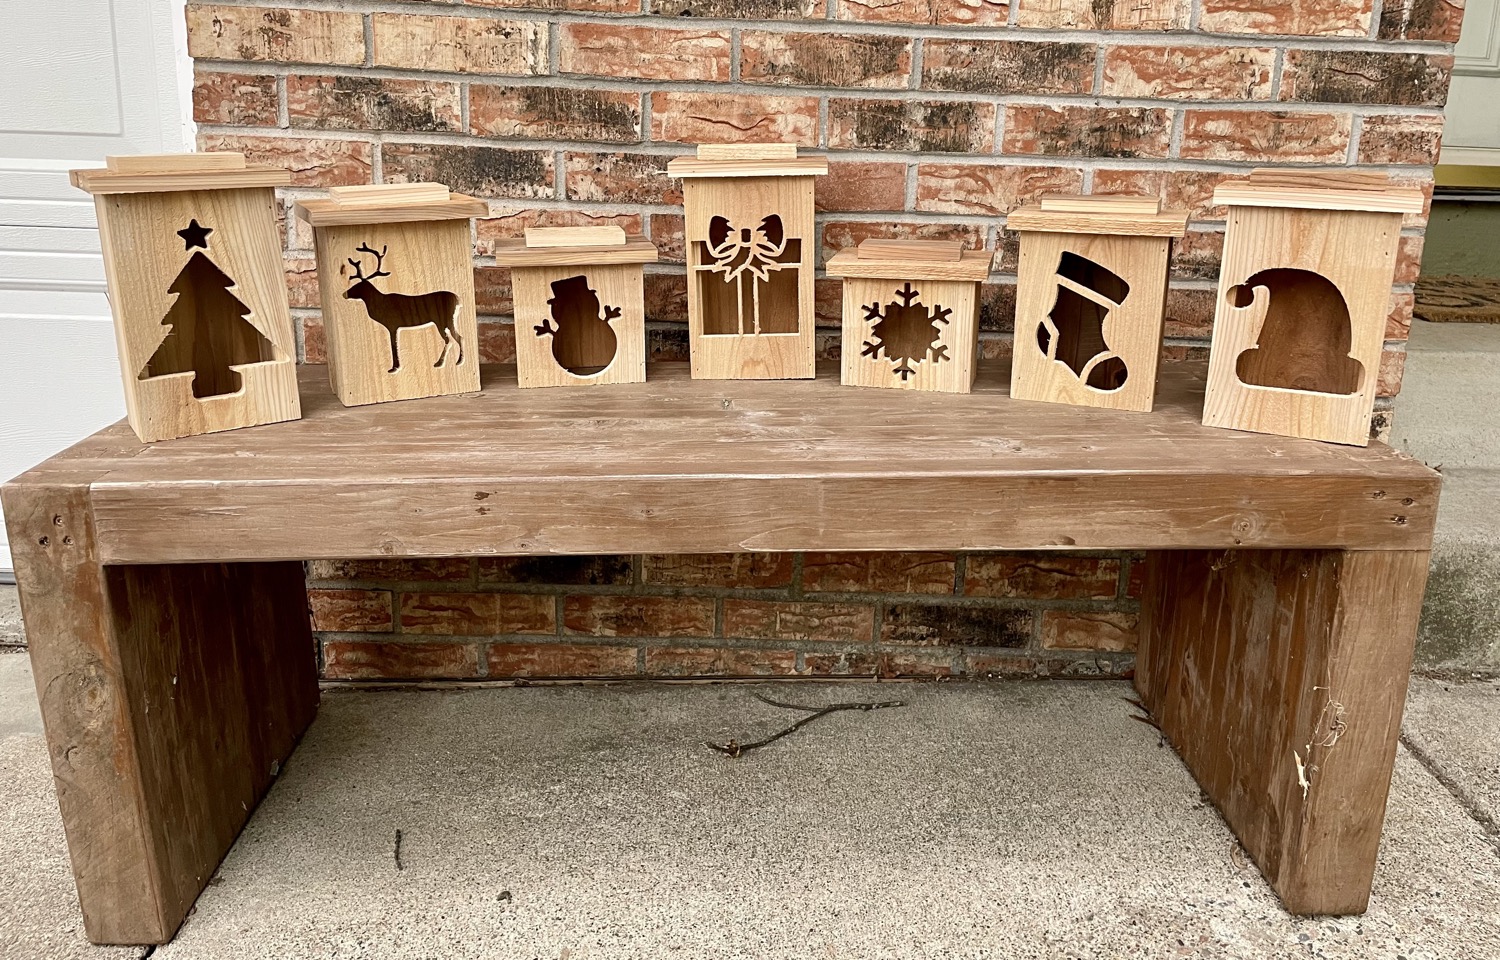 Picture of XMas lantern boxes